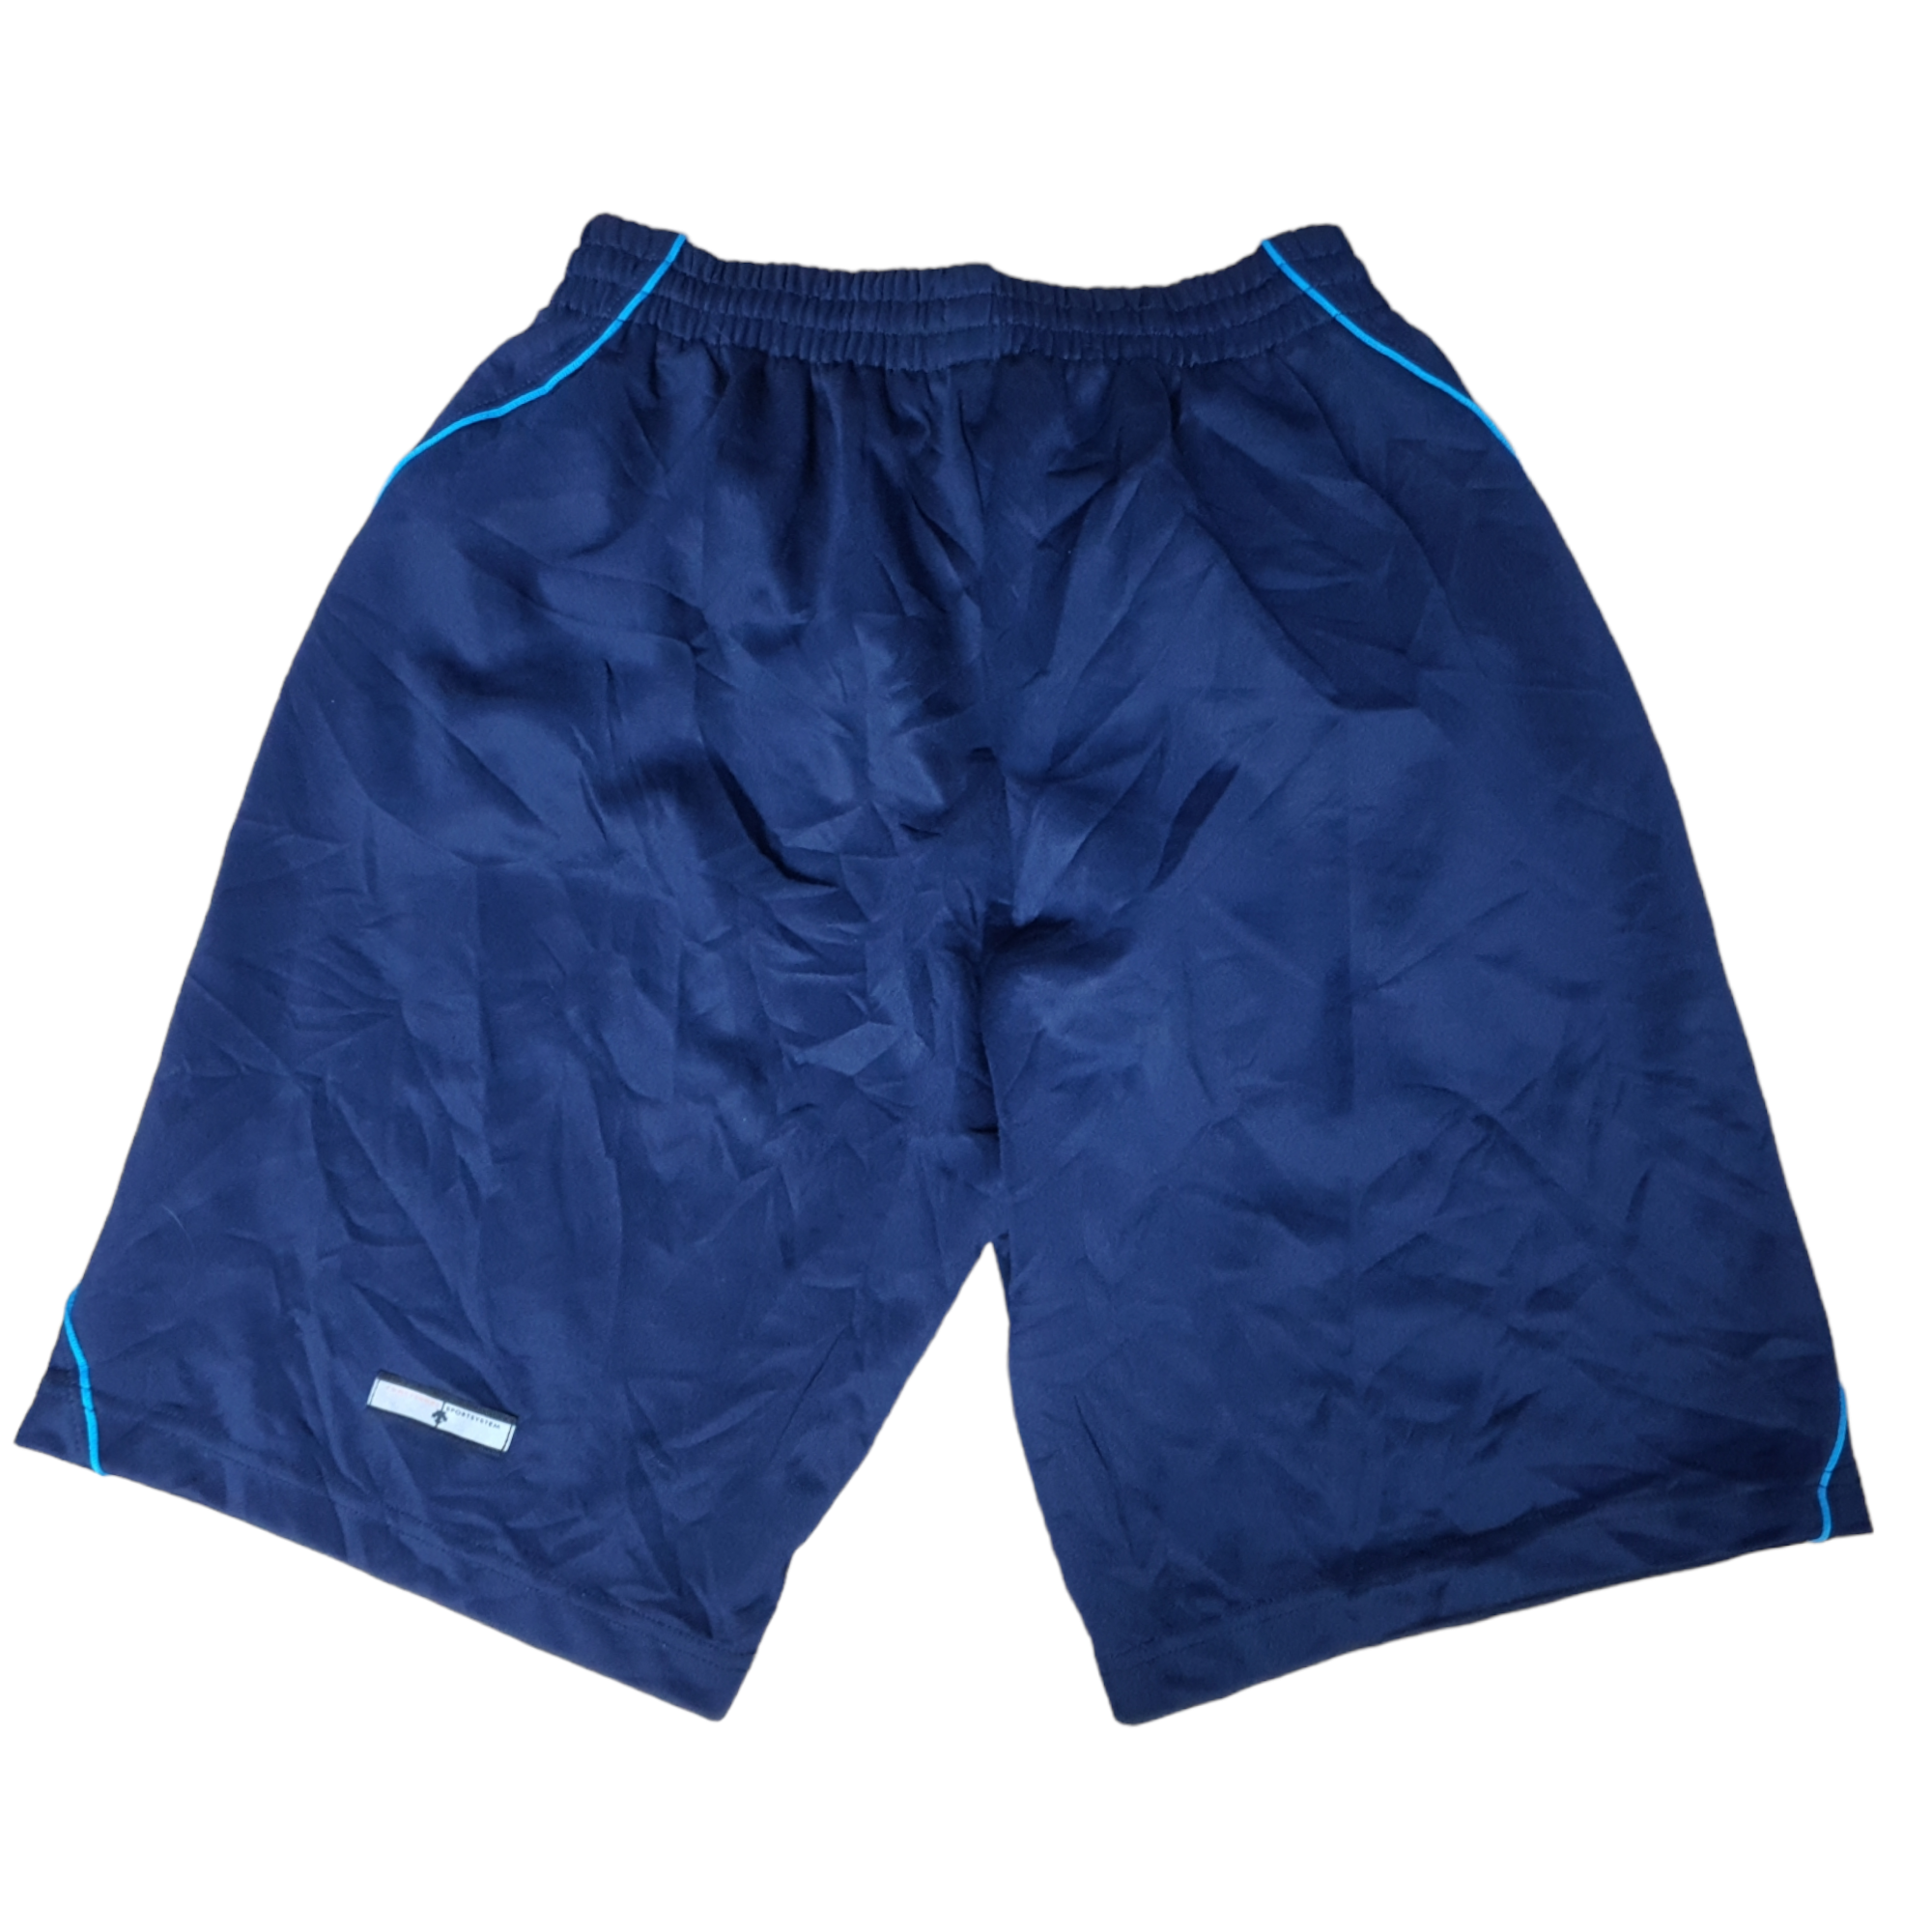 [L] dunkelblaue Shorts